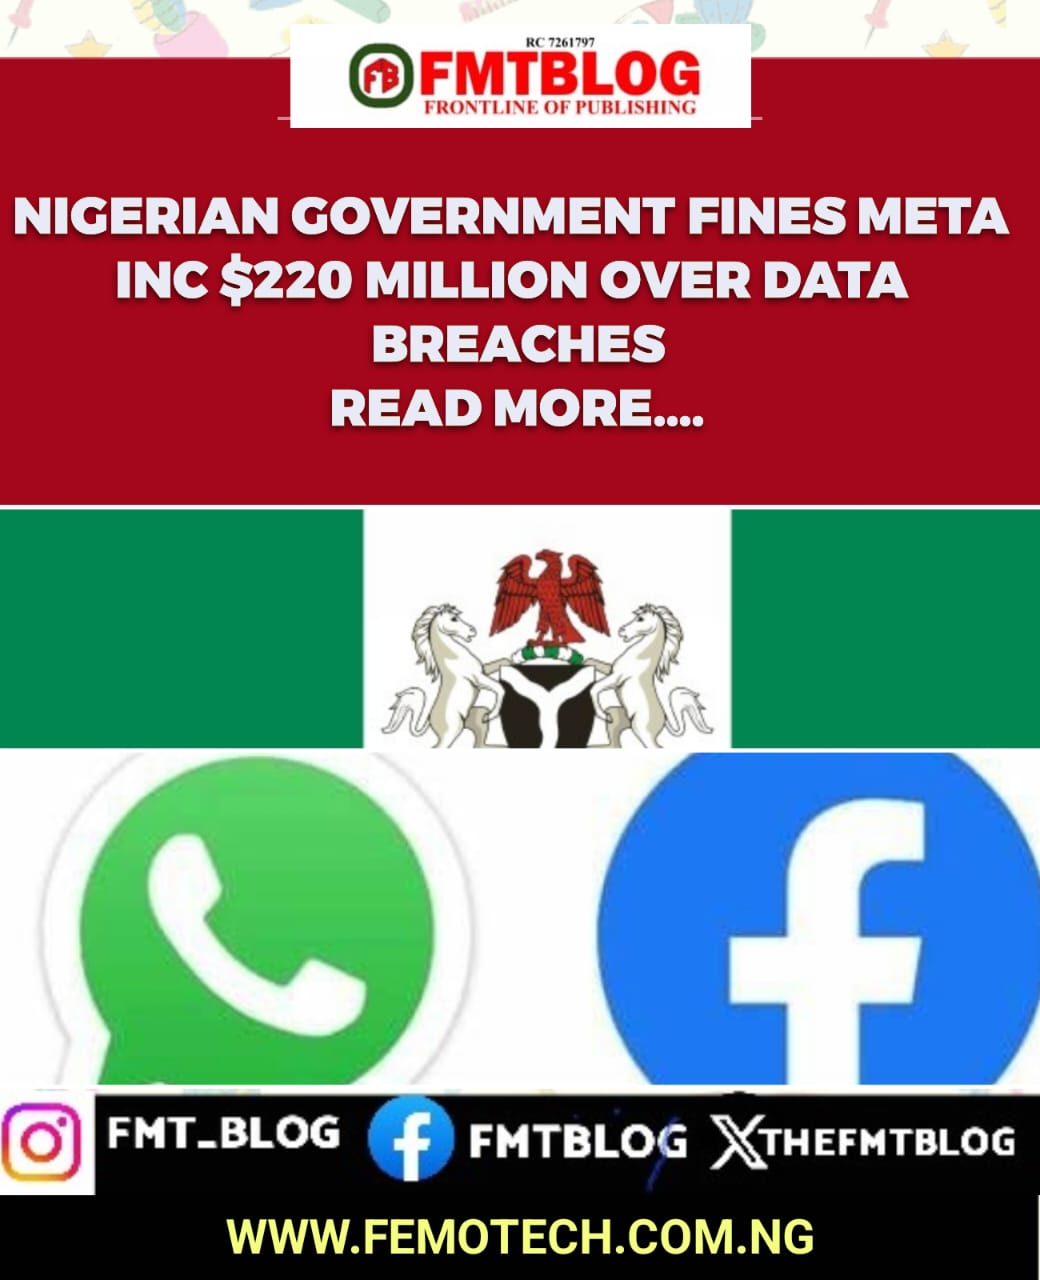 Nigerian Government Fines Meta INC. $220m Over Data Breaches